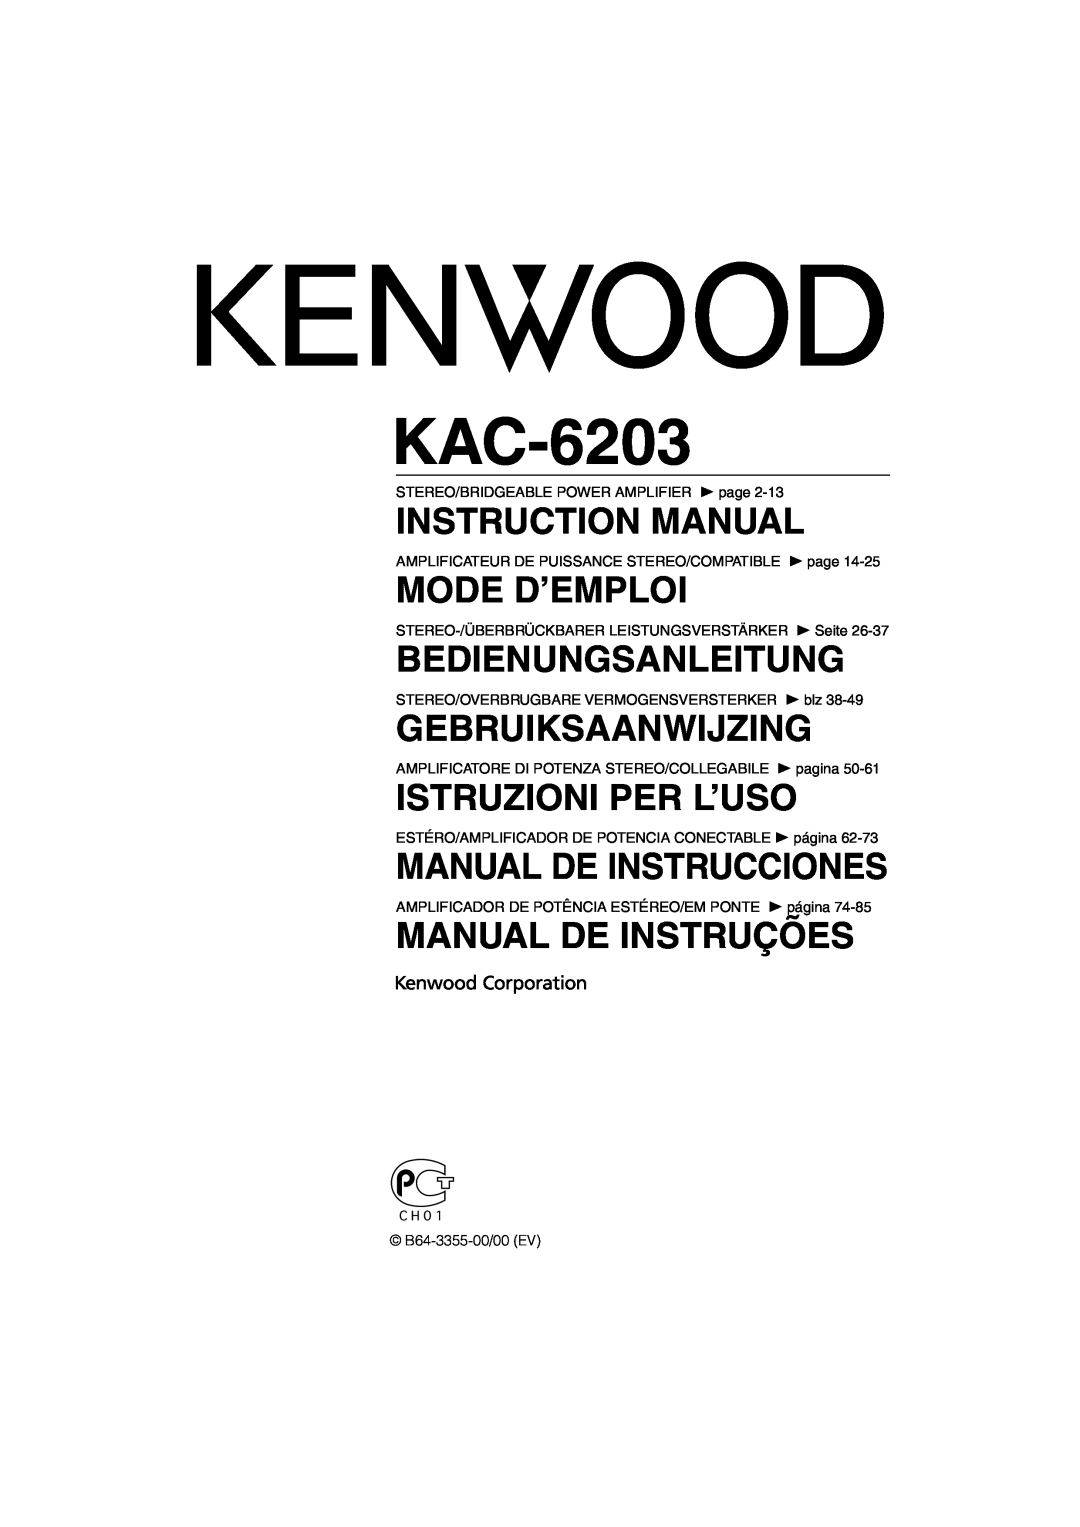 Kenwood KAC-6203 instruction manual Mode D’Emploi, Bedienungsanleitung, Gebruiksaanwijzing, Istruzioni Per L’Uso 